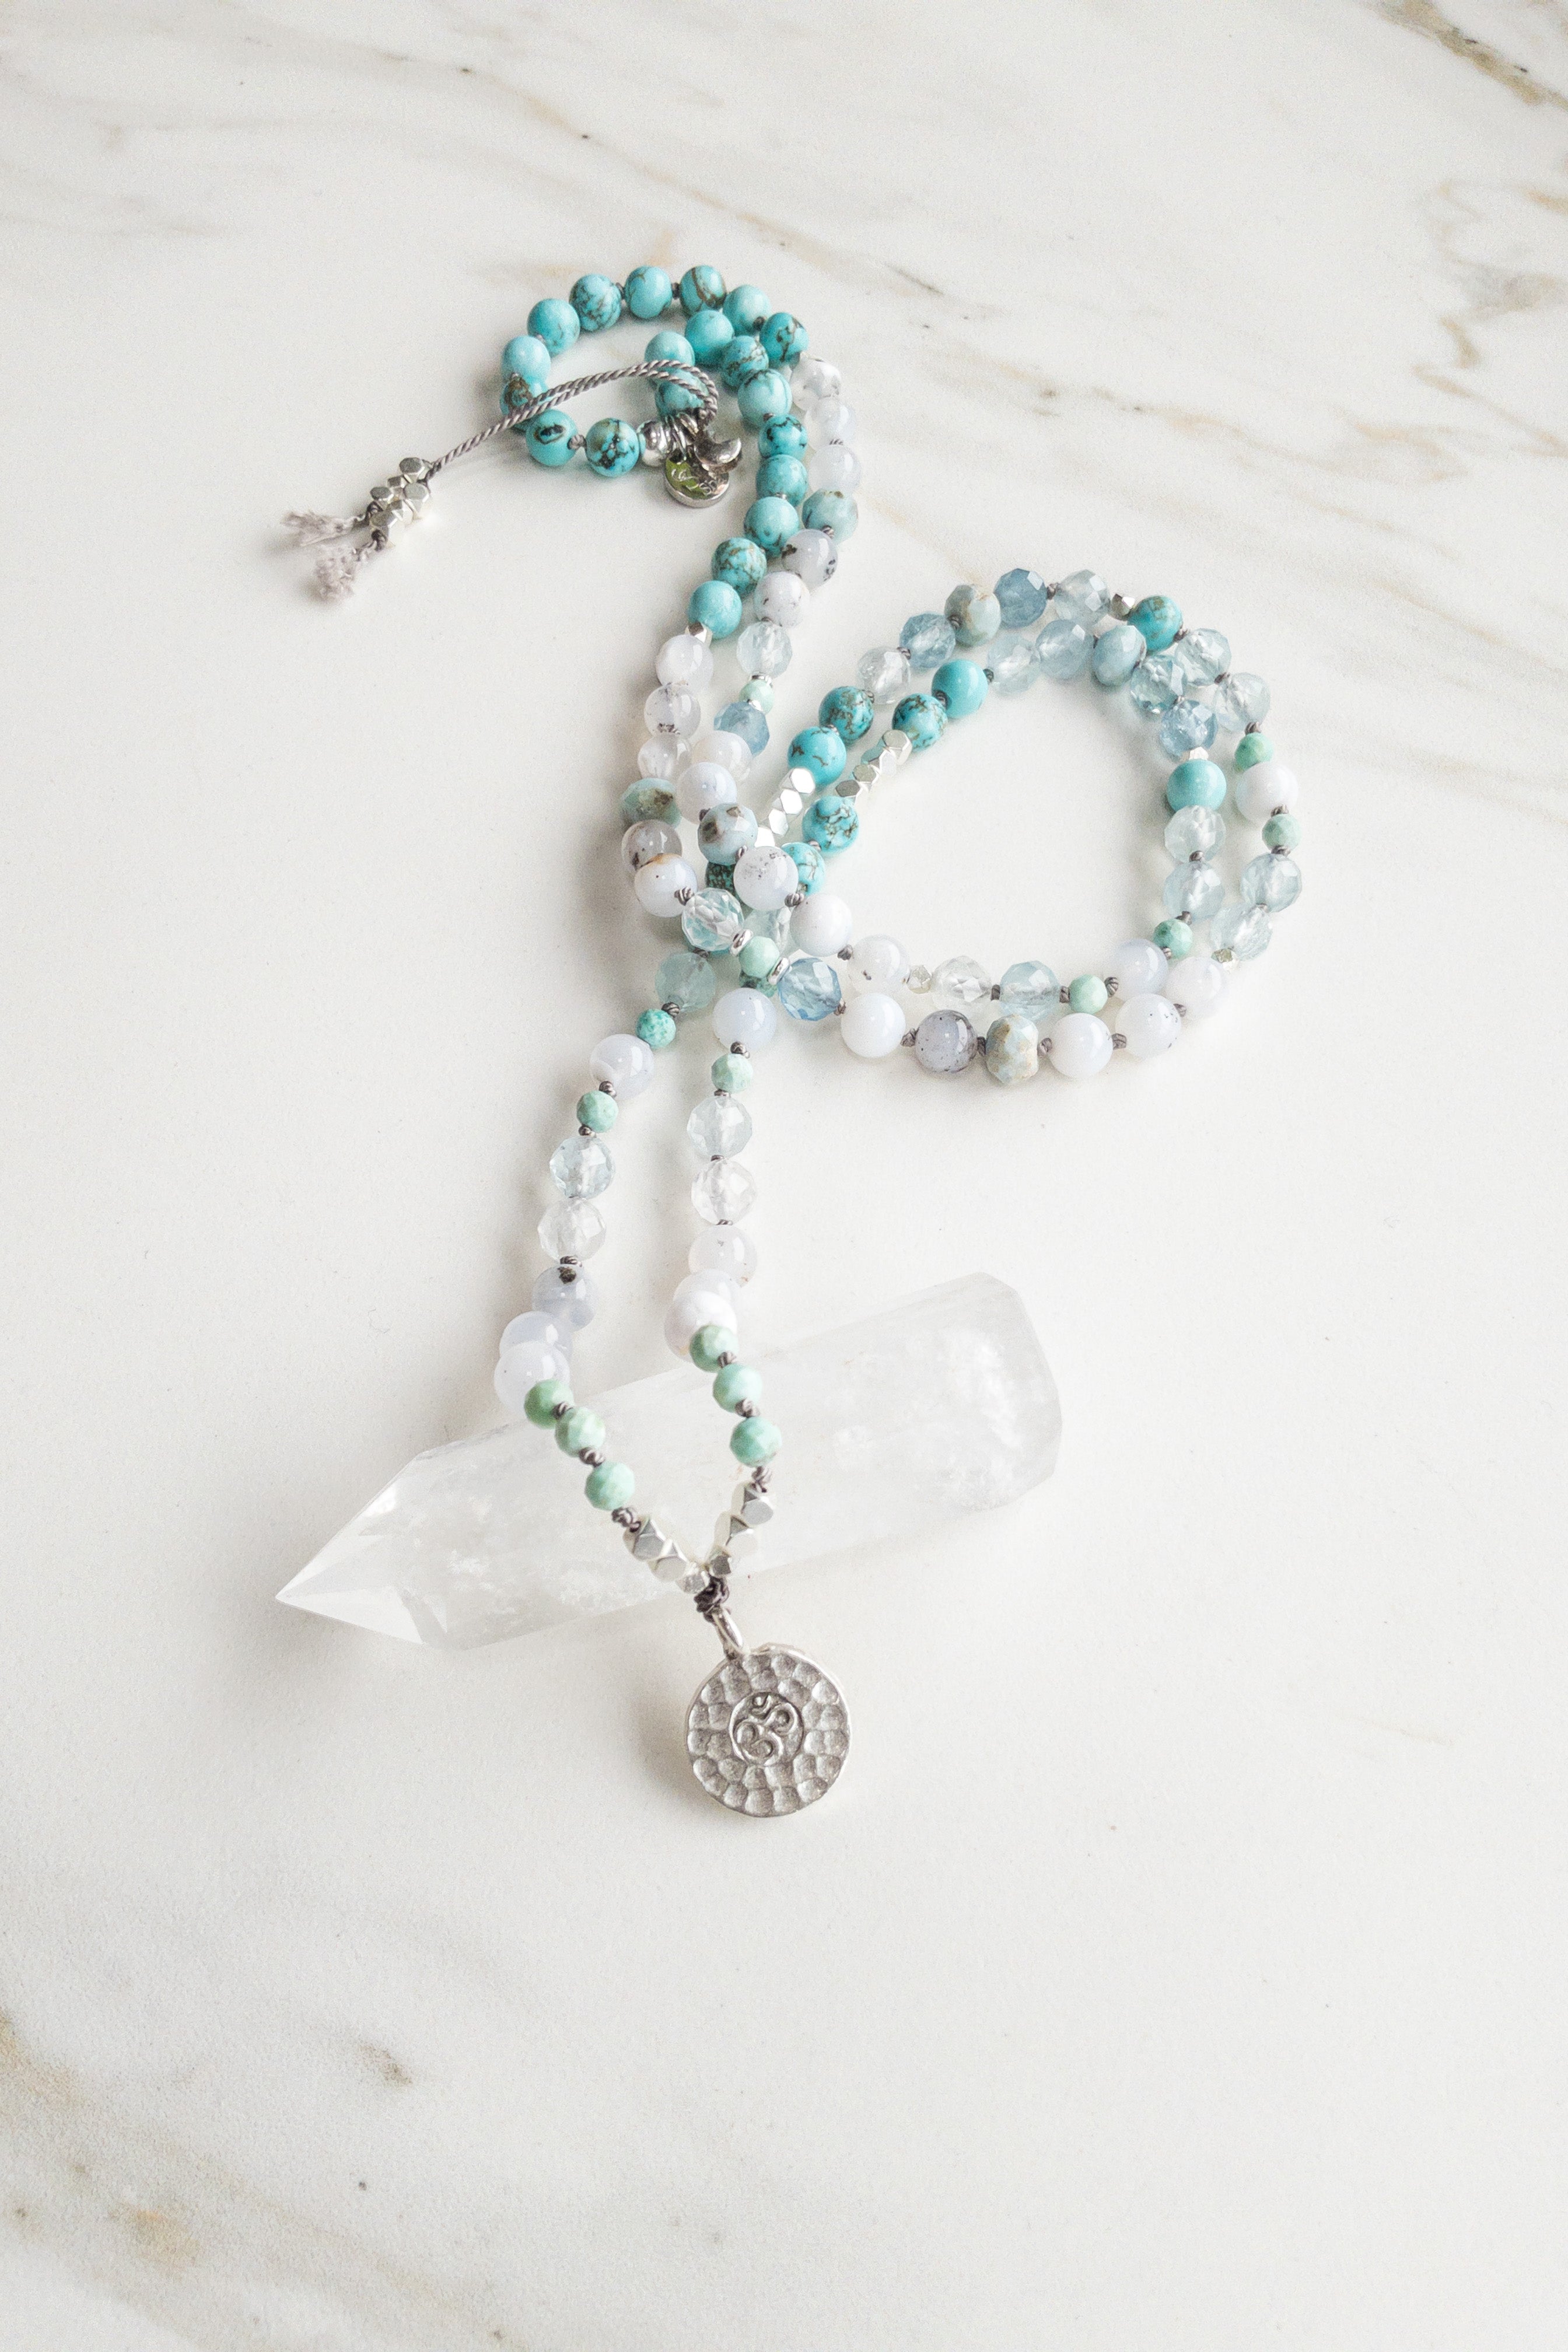 Celestial Serenity Mala Necklace - OM - Indradhanush - turquoise larimar moss opal 108 beads- shashā yoga and meditation jewellery Switzerland 